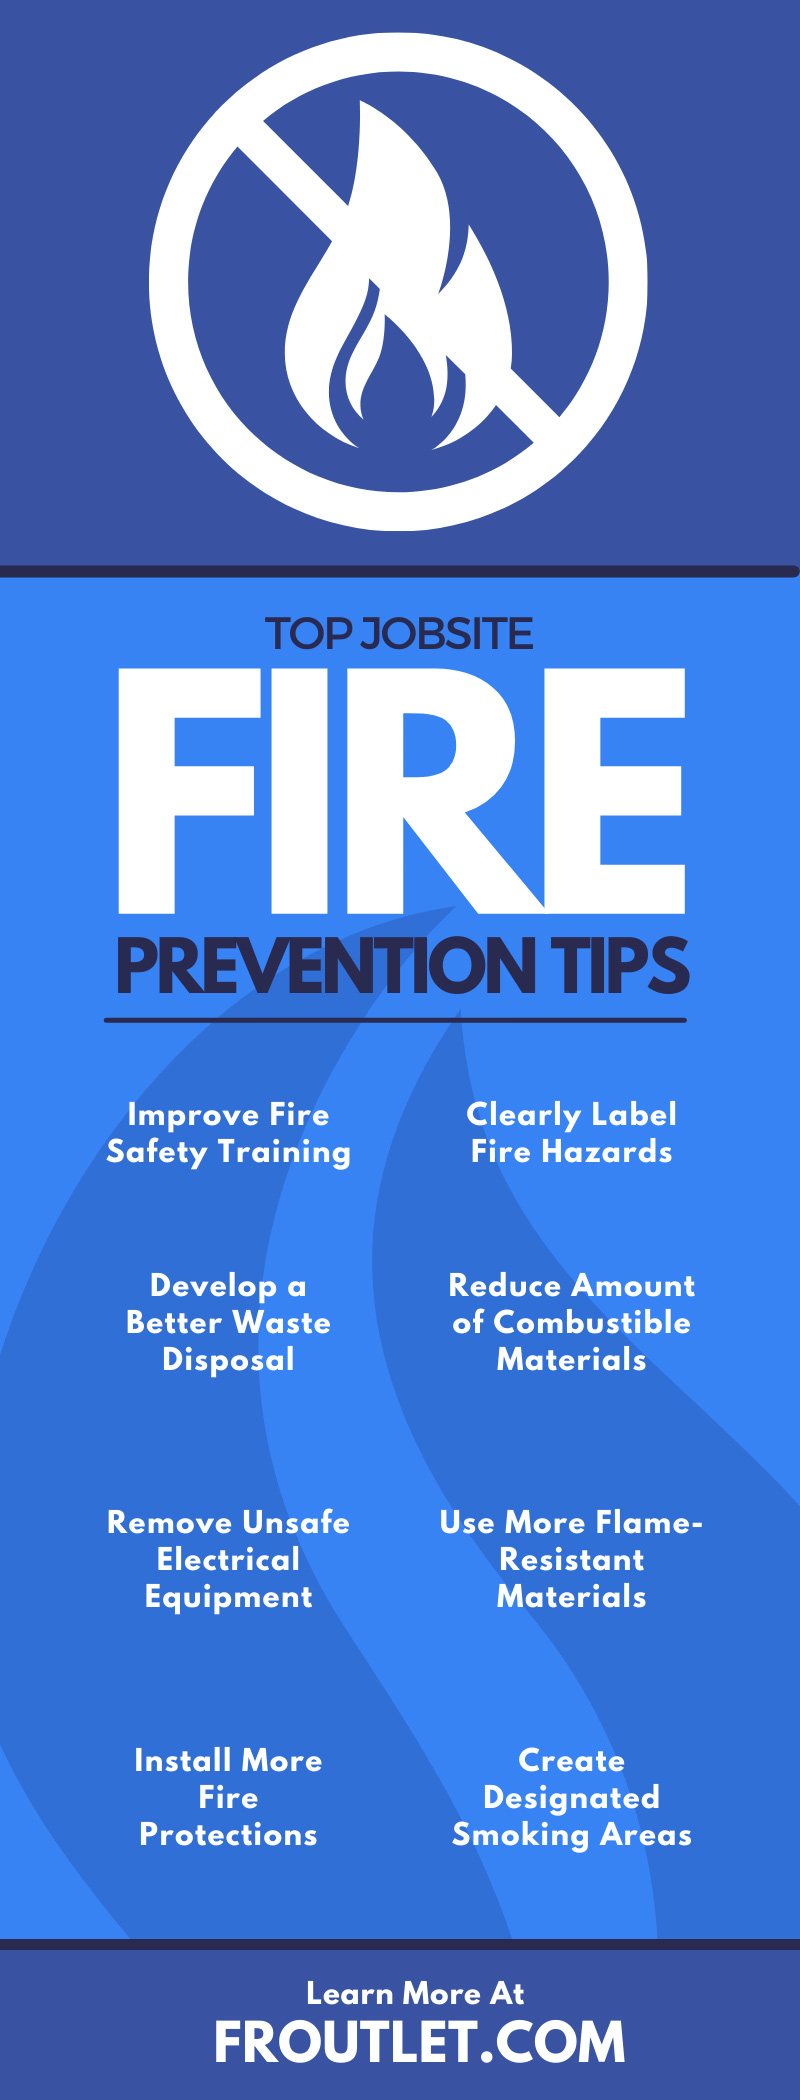 Top Jobsite Fire Prevention Tips